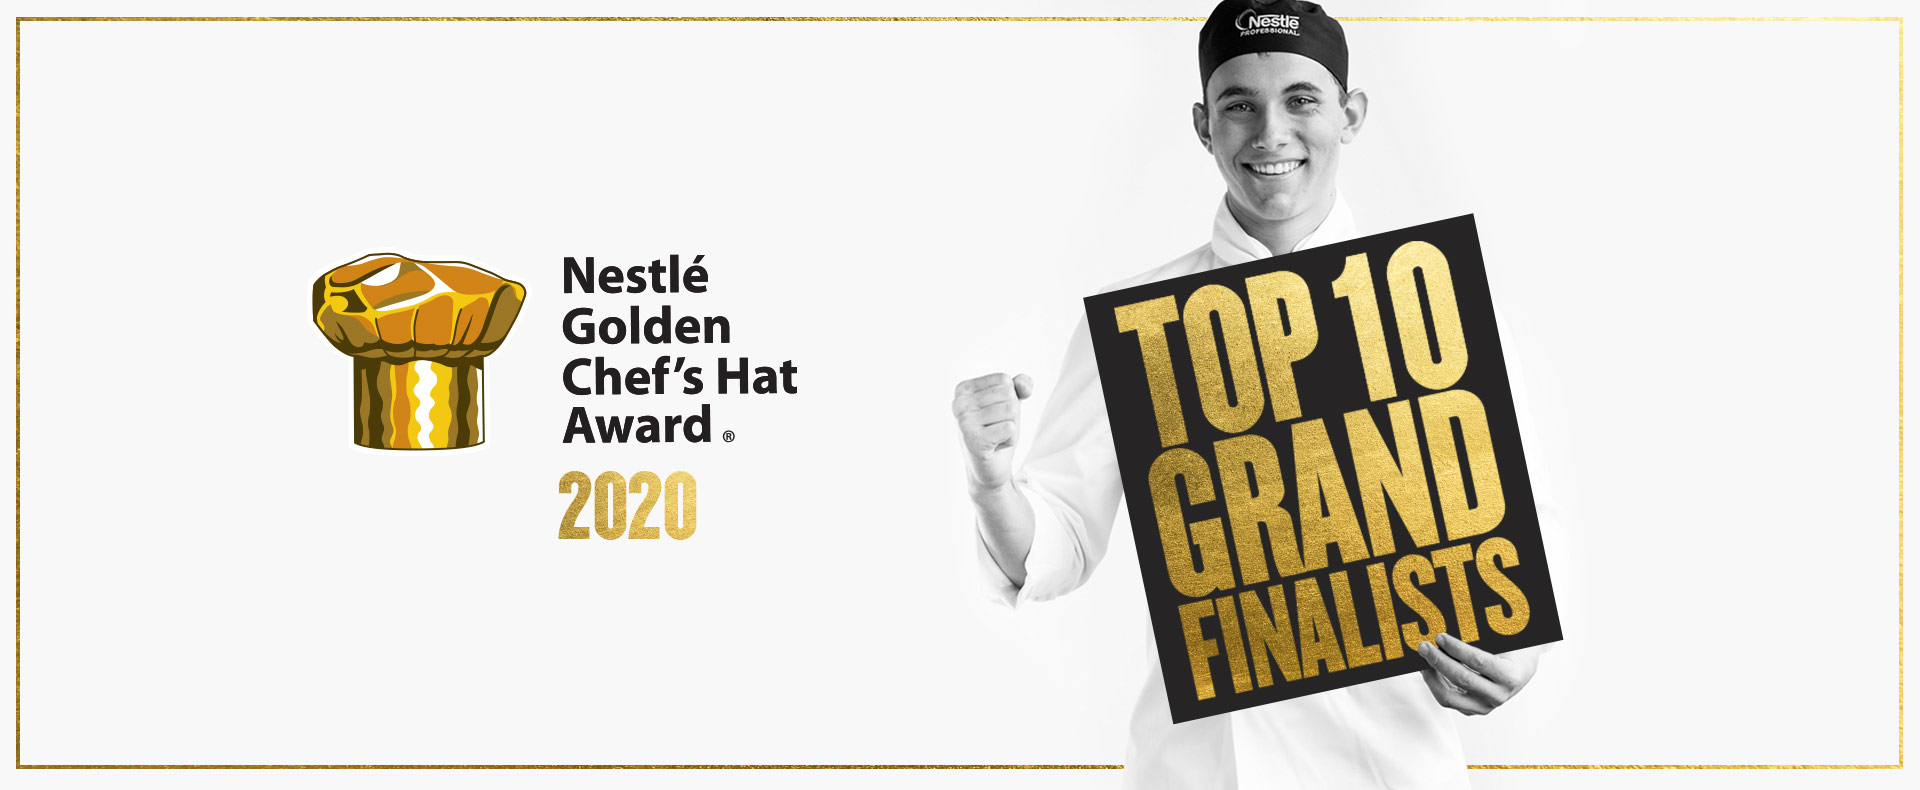 Top 10 Finalist Chefs To Represent Australia & New Zealand